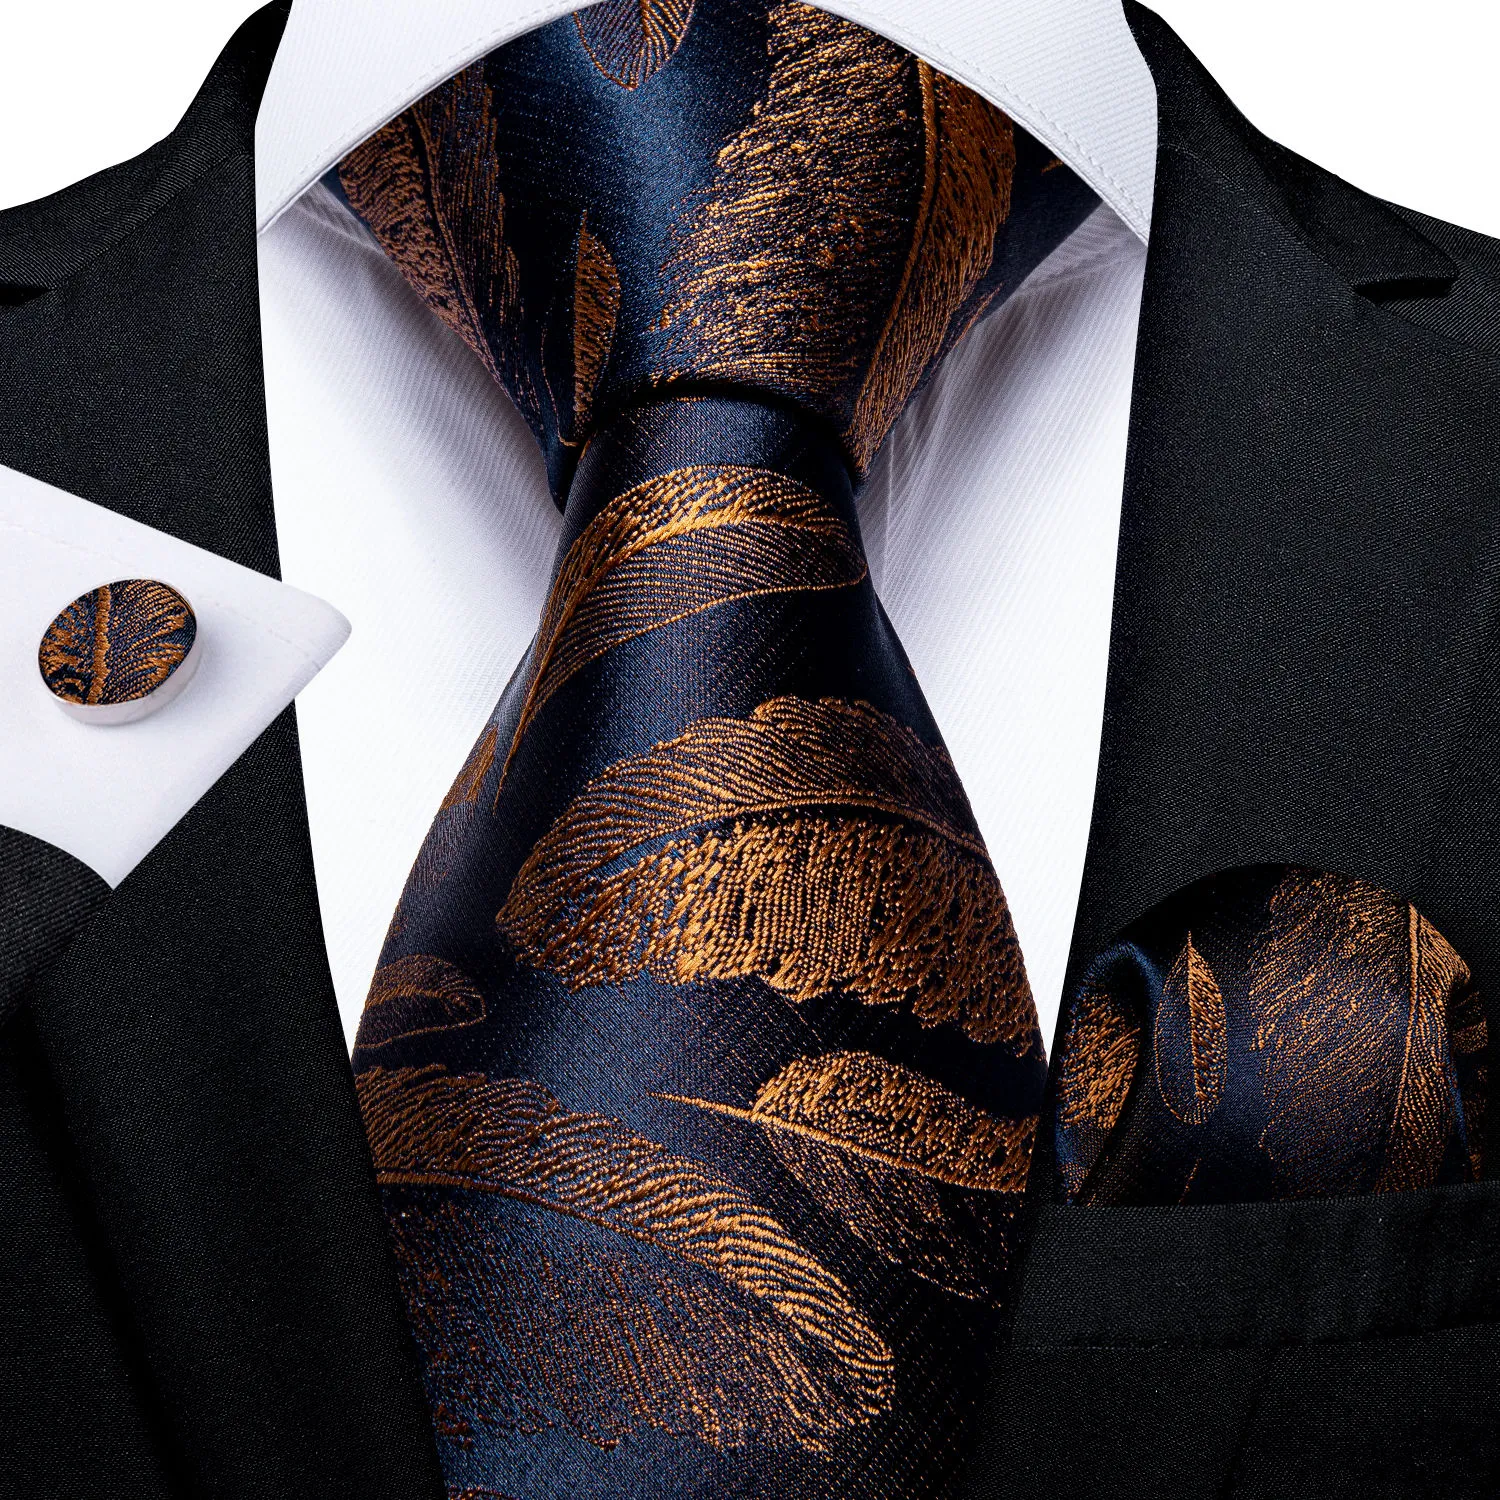 8cm Fashion Gold Feather Stampa Stampa Seta Ties Ties Gemelli Set Set Partito Business Party Cravatta Goratas Regalo per uomo Dibangu